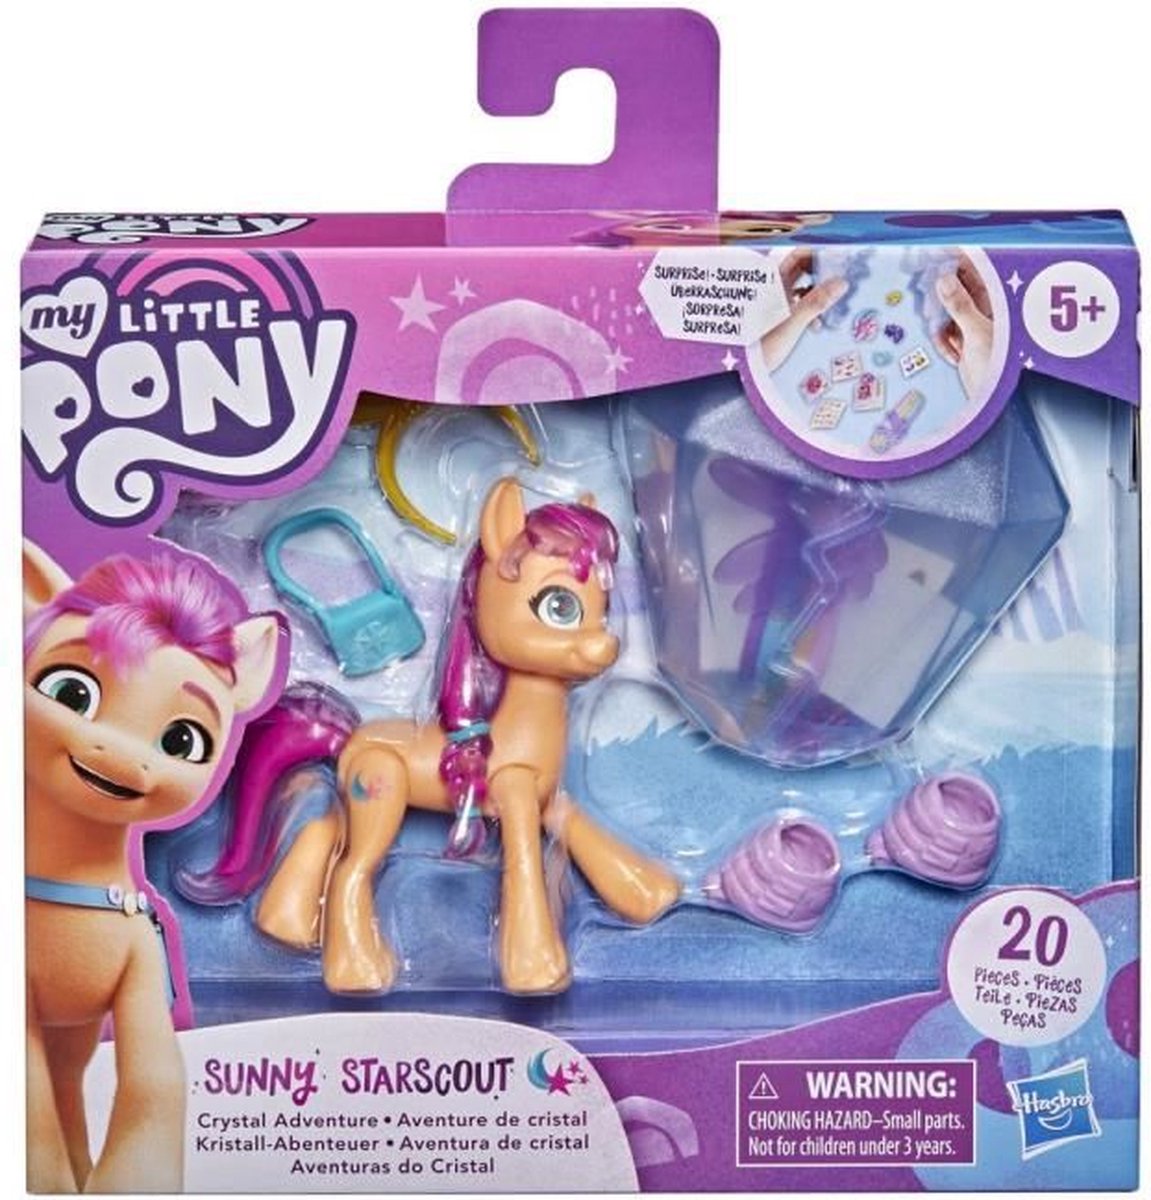 My Little Pony - Speelfiguur - Sunny Starscout - Crystal Adventure